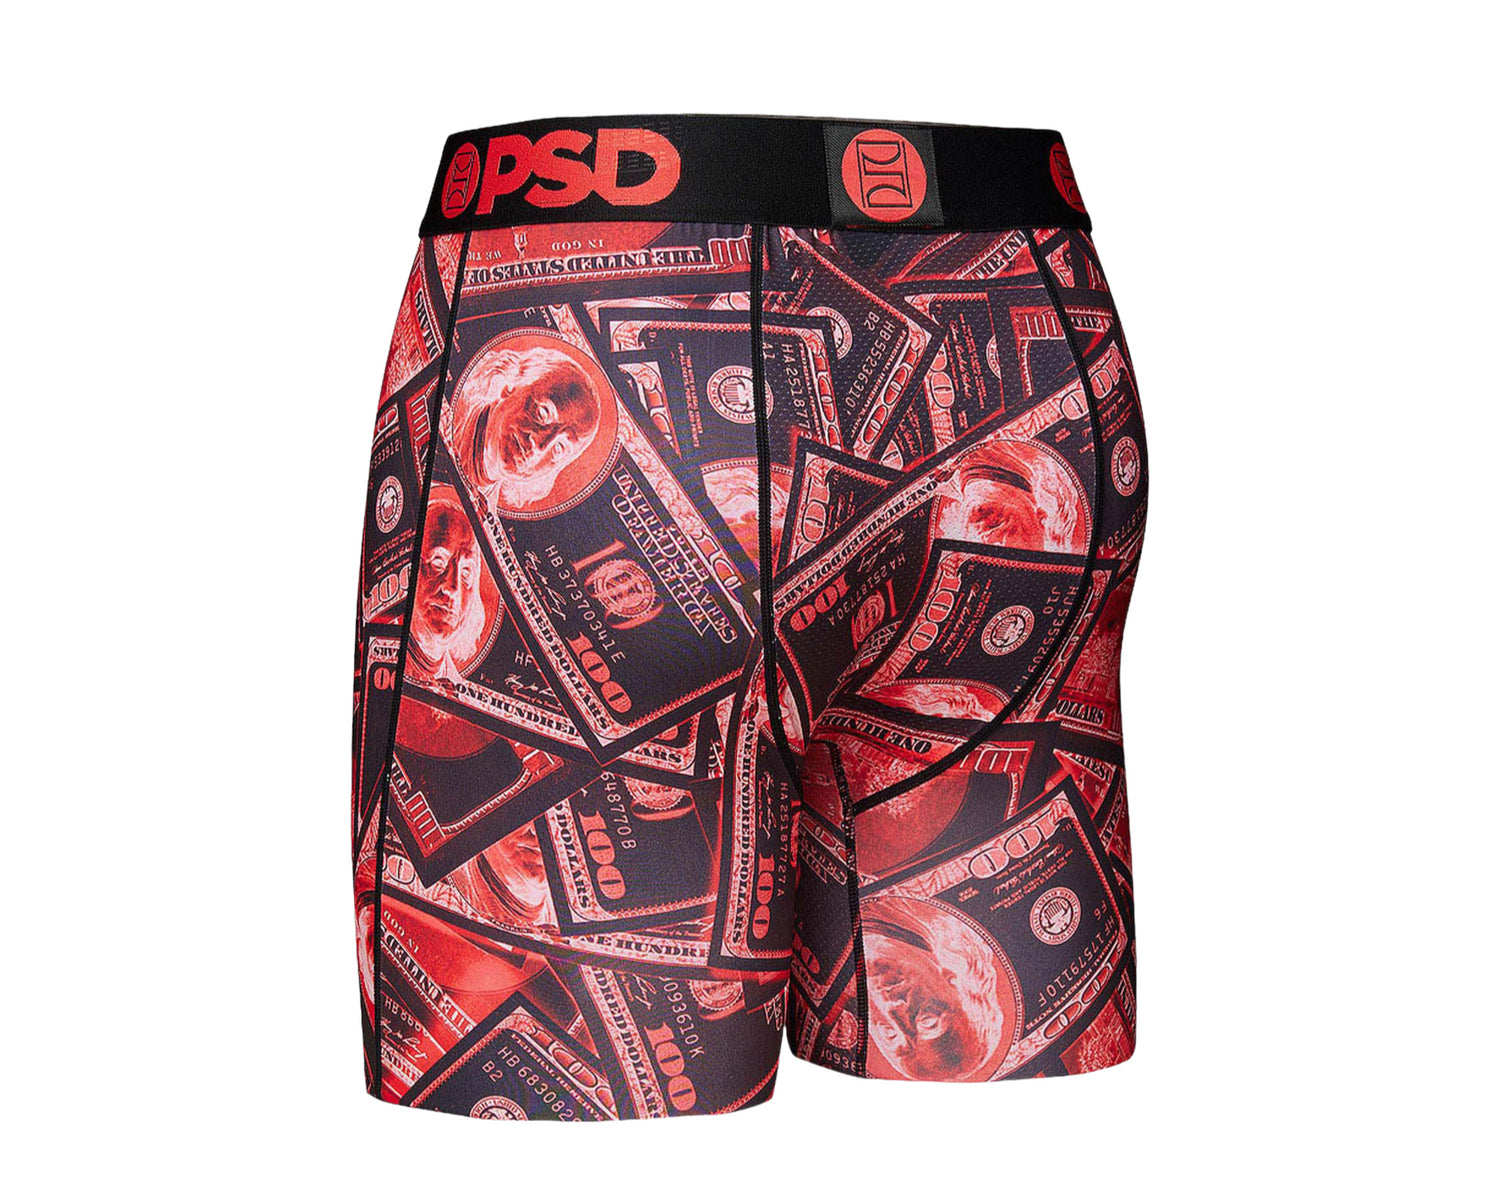 PSD Warface Capital Boxer Briefs Men's Underwear